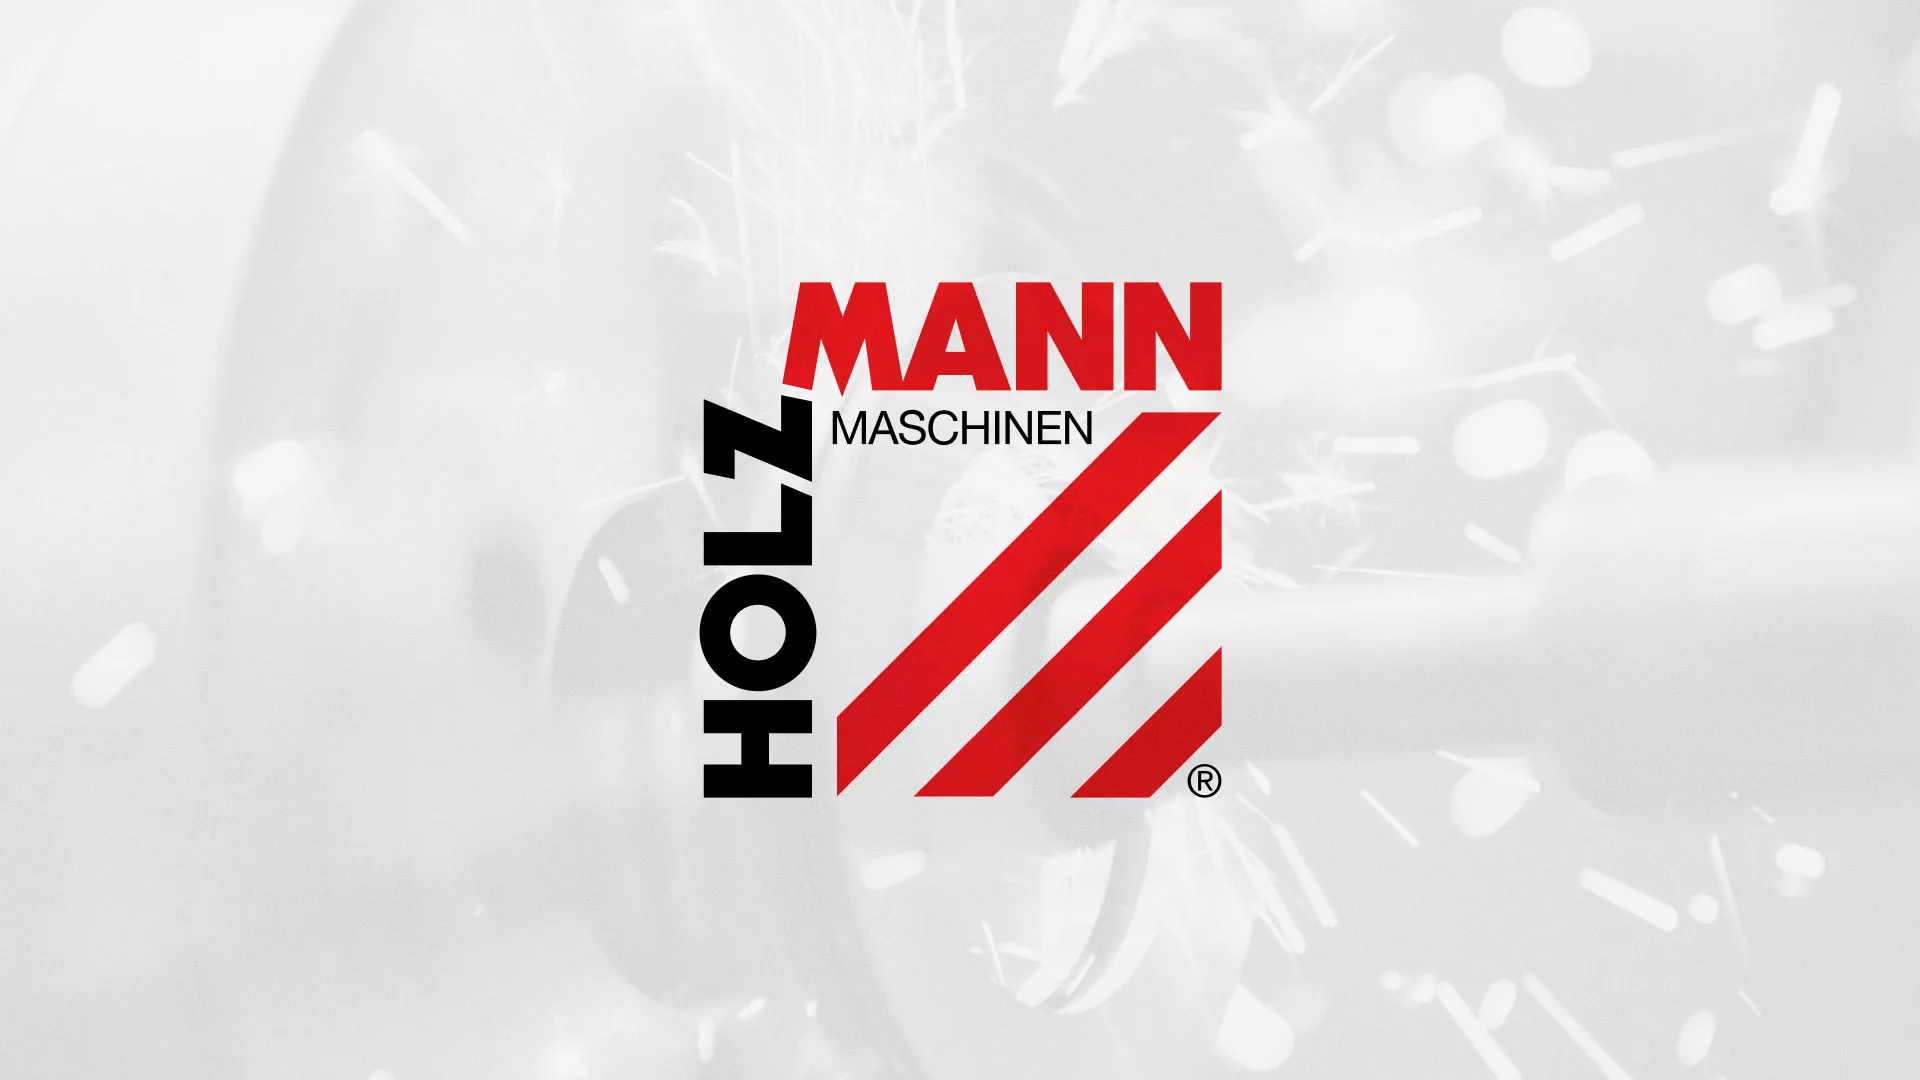 Создание сайта компании «HOLZMANN Maschinen GmbH» в Вятских Полянах